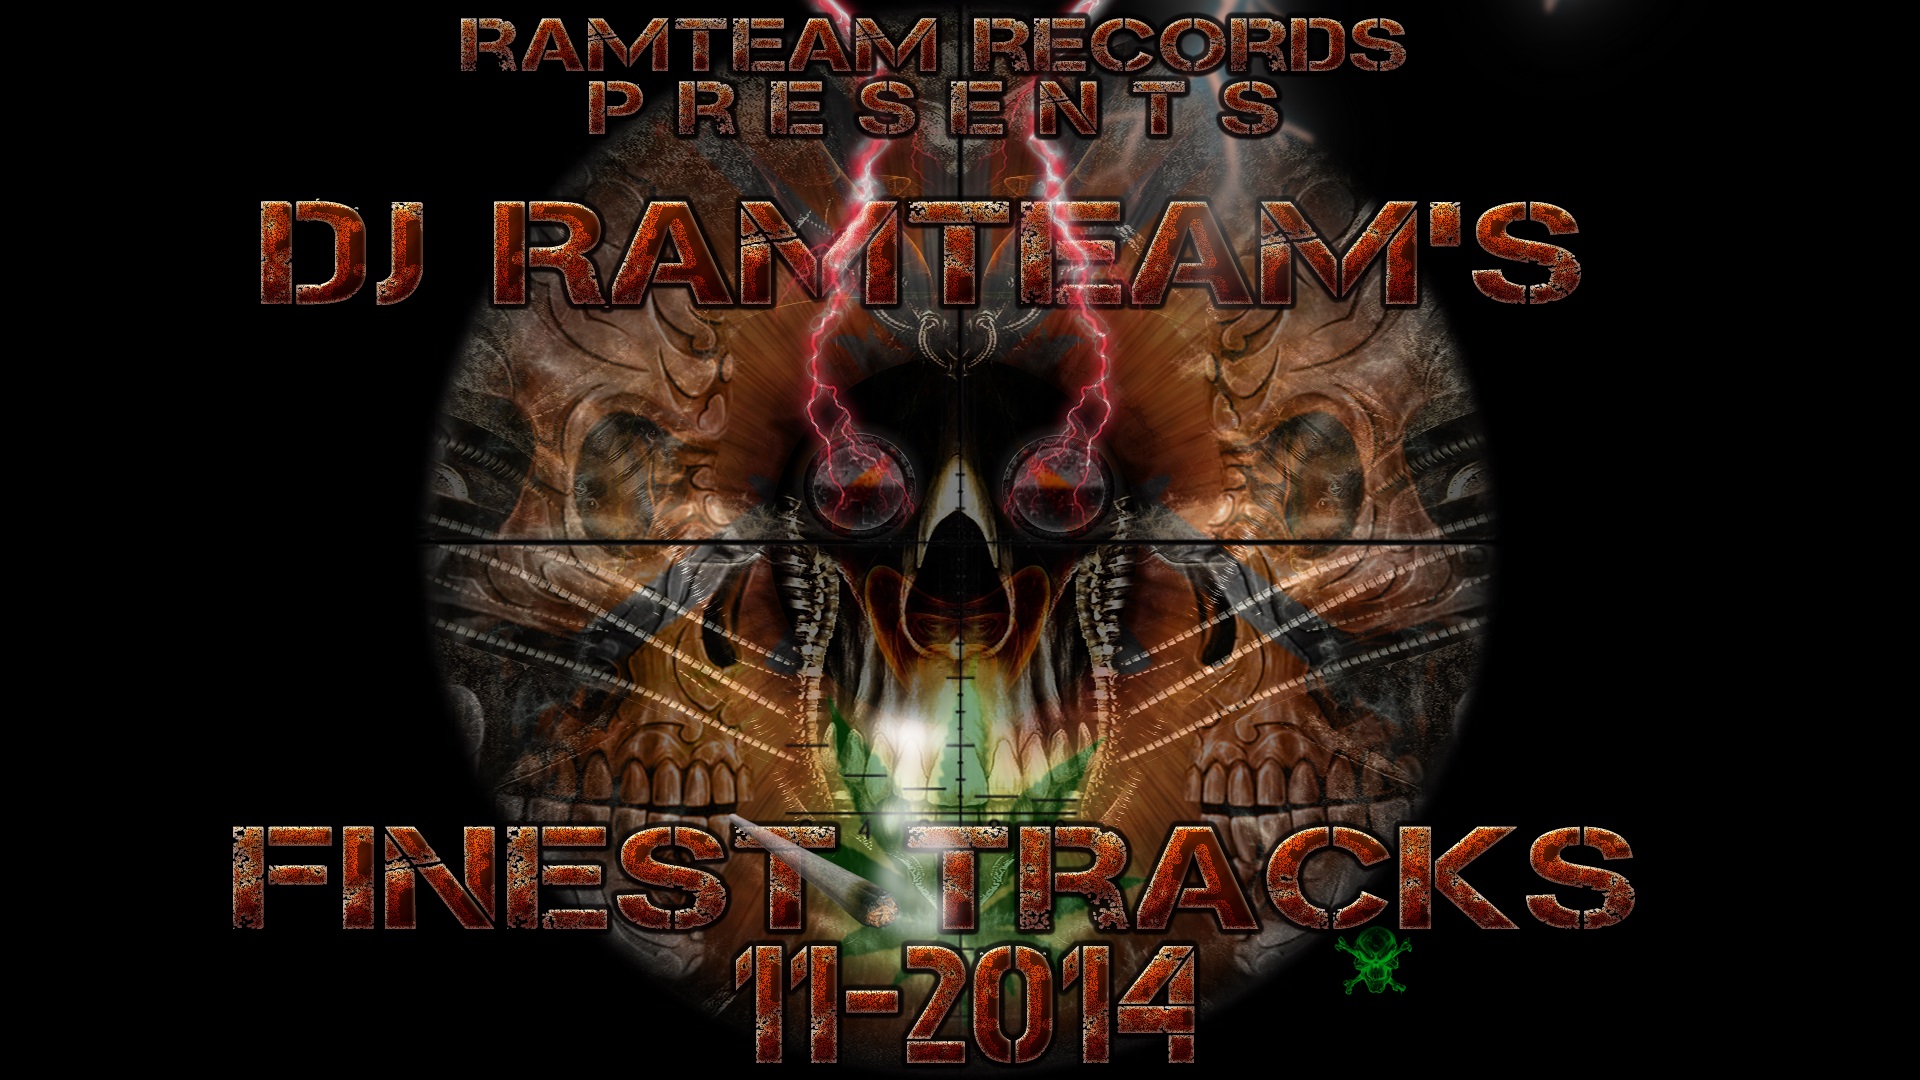 [2015] Ramteam Records presents DJ Ramteam's Finest Tracks